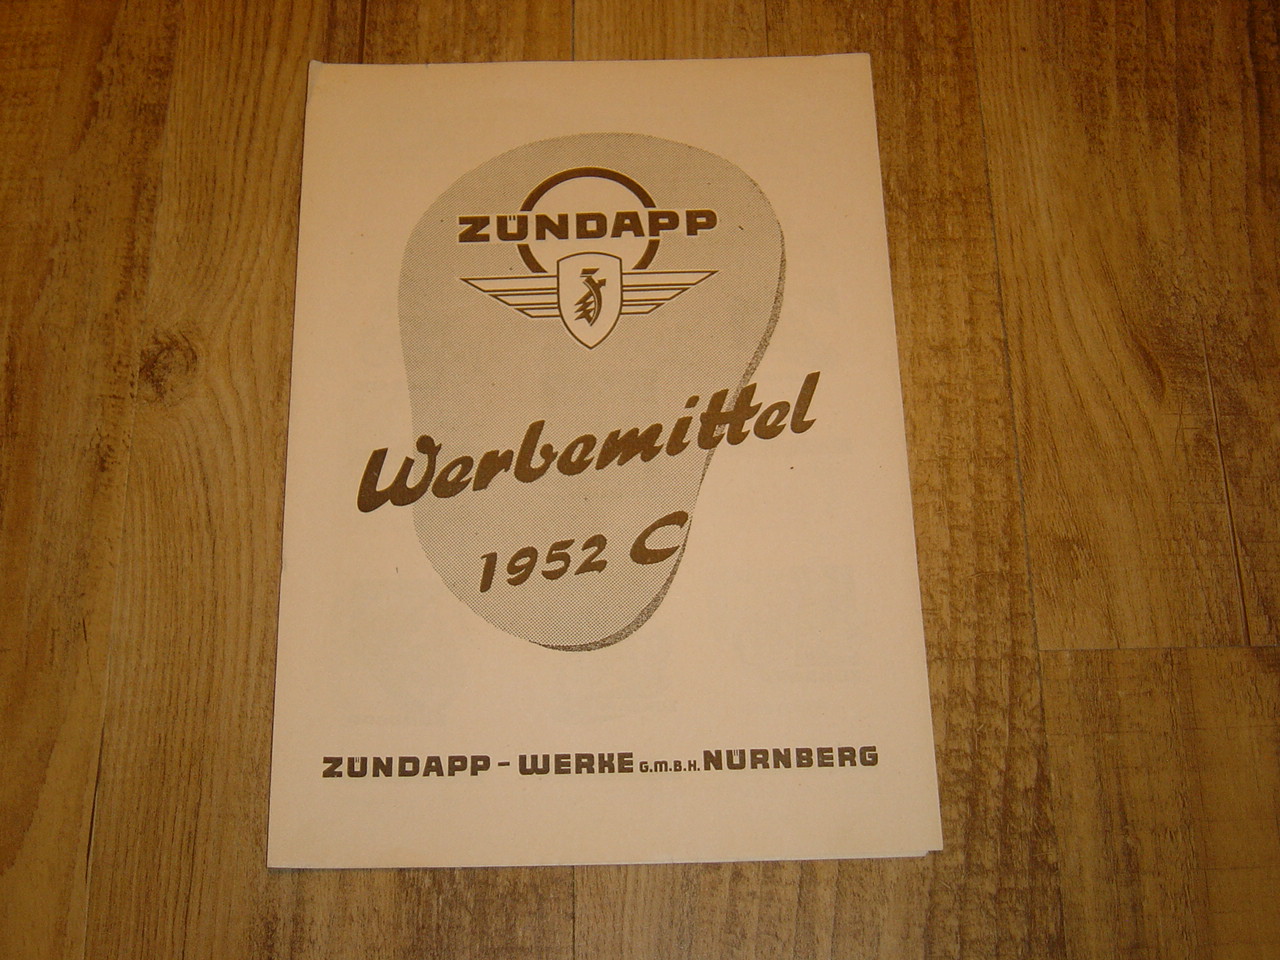 Promotional brochure D - Werbemittel 1952 C